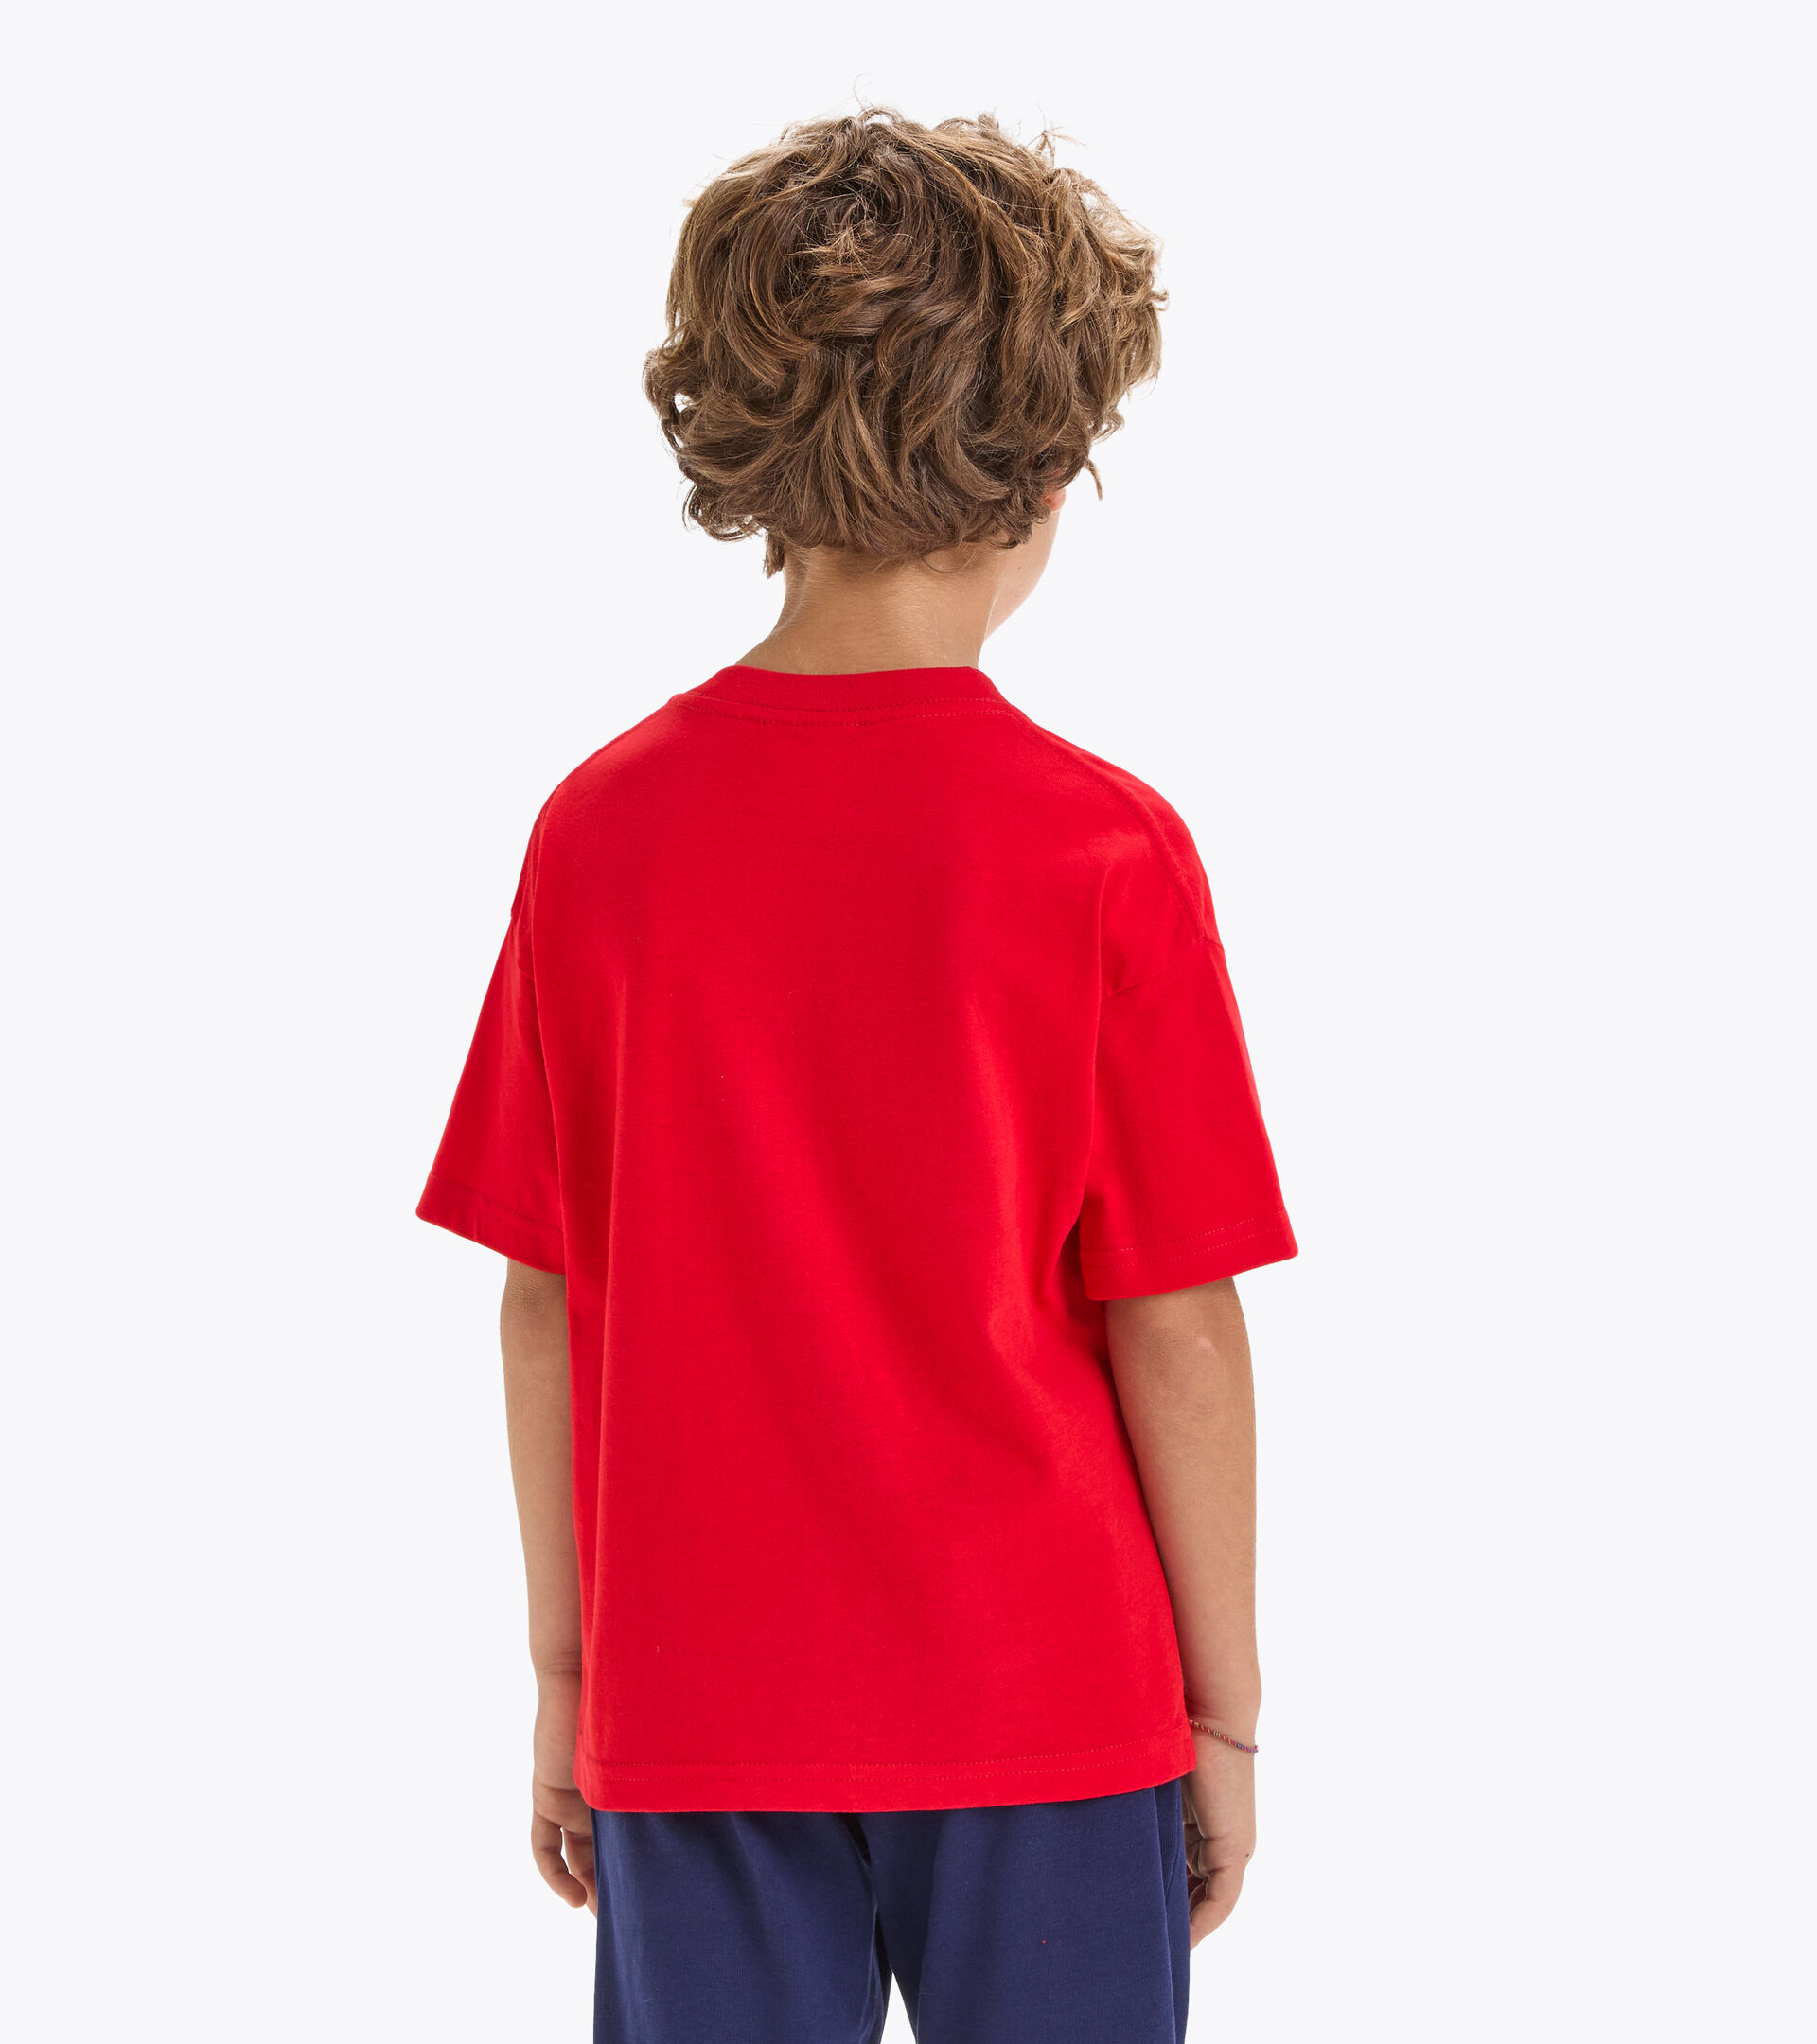 T-shirt de sport - Enfants
 JU.T-SHIRT SS BL HAUT RISQUE ROUGE - Diadora